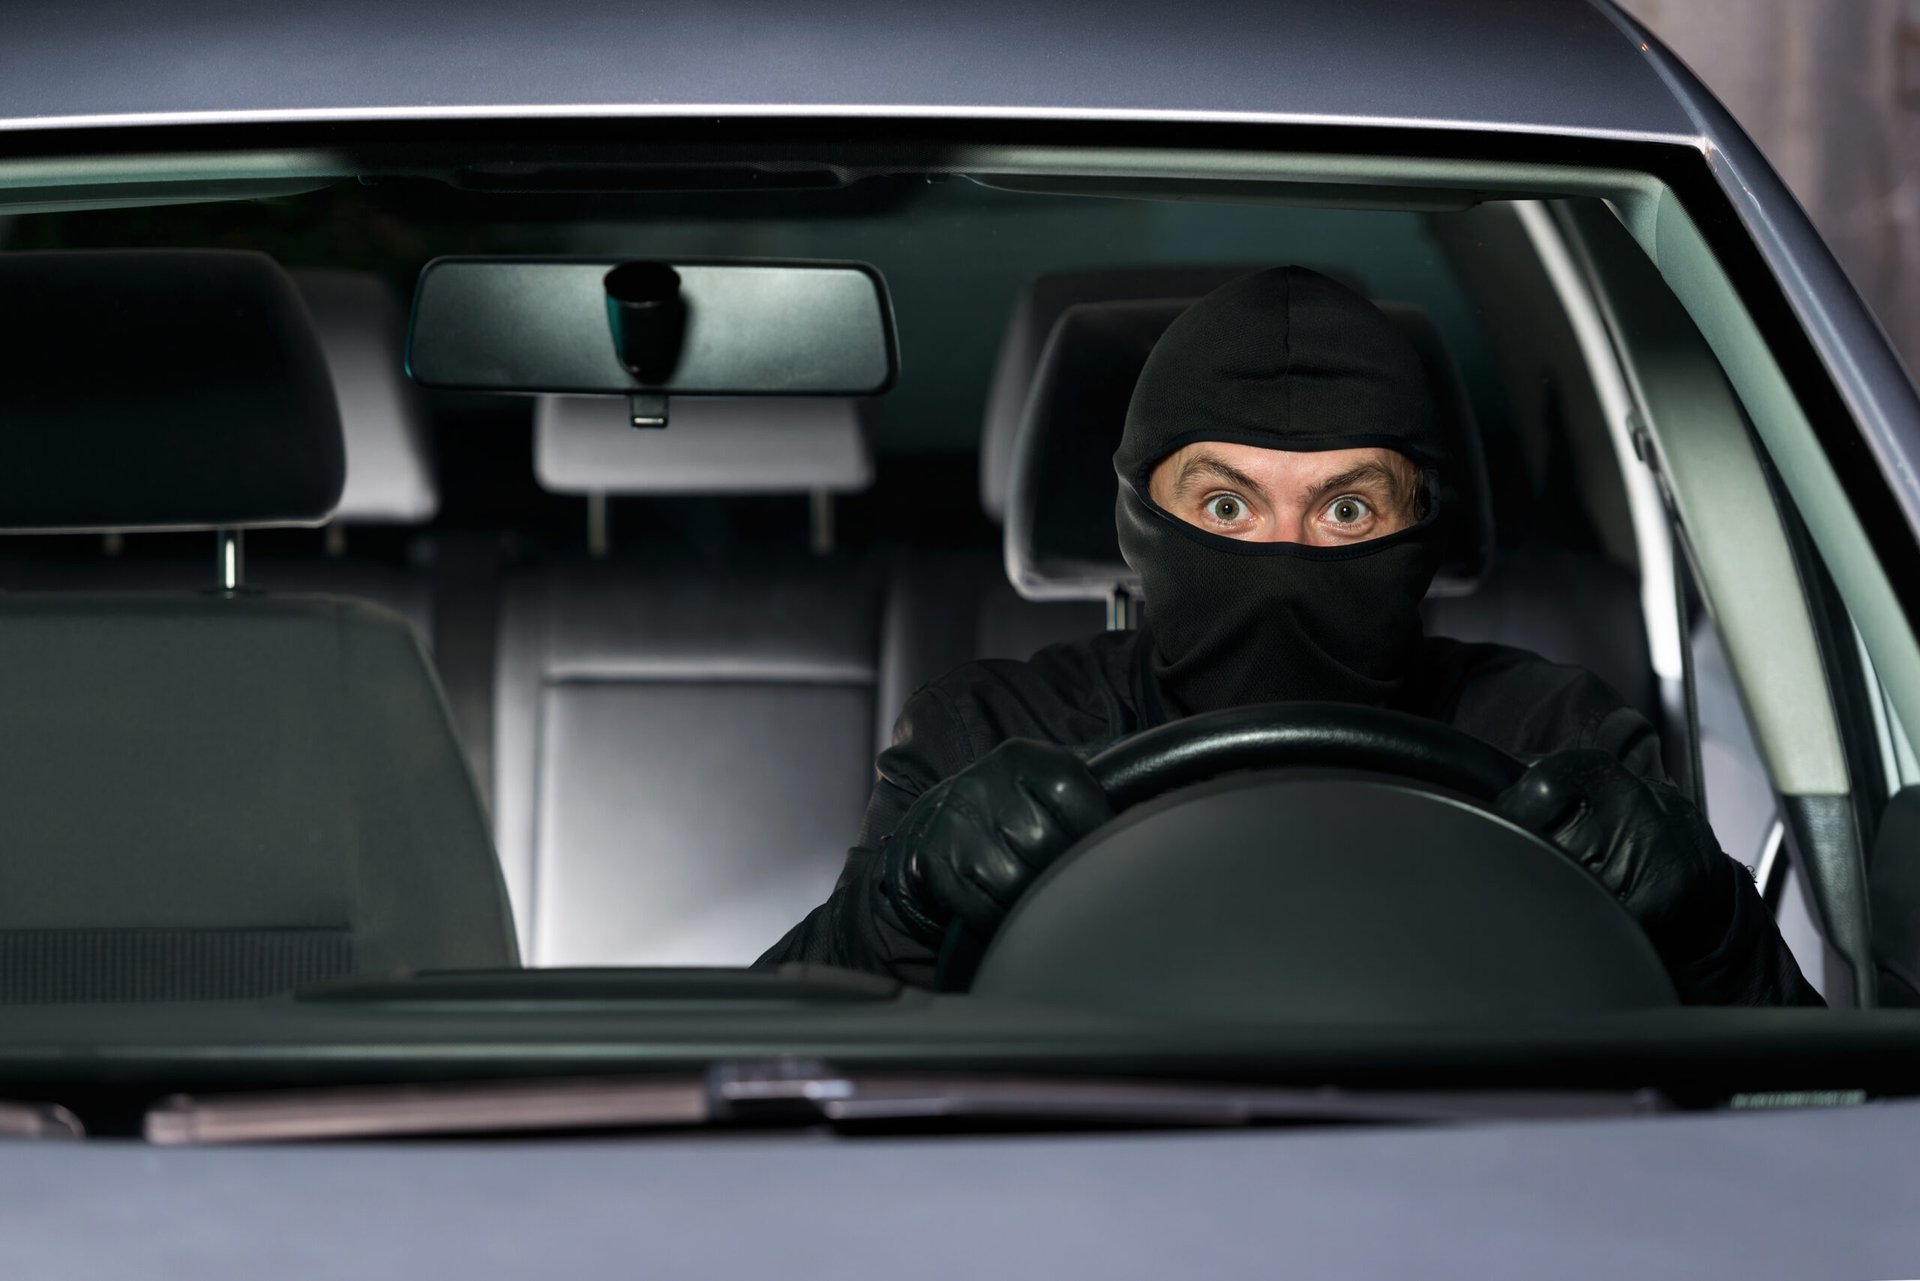 Thief in a stolen car